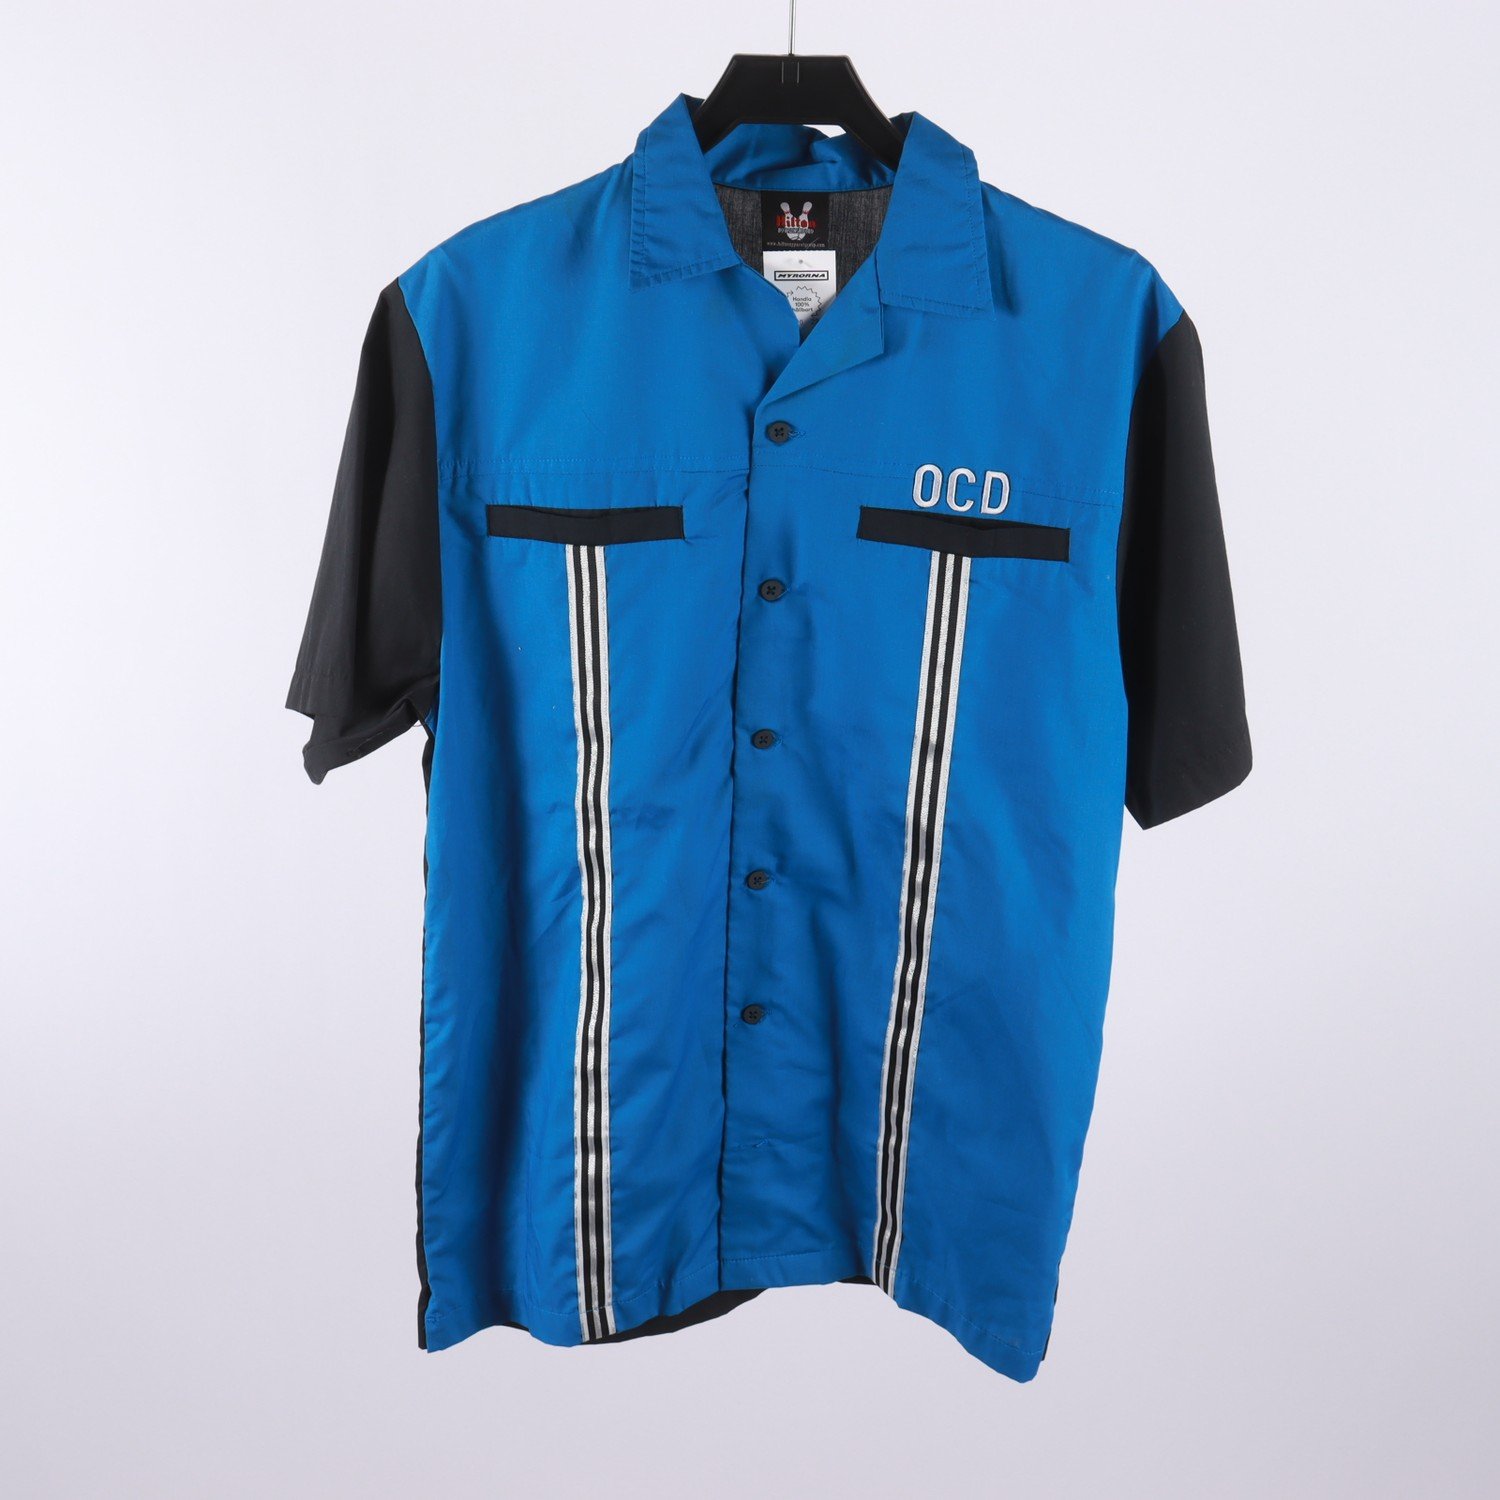 Bowlingskjorta, Hilton, blå, svart, stl. S